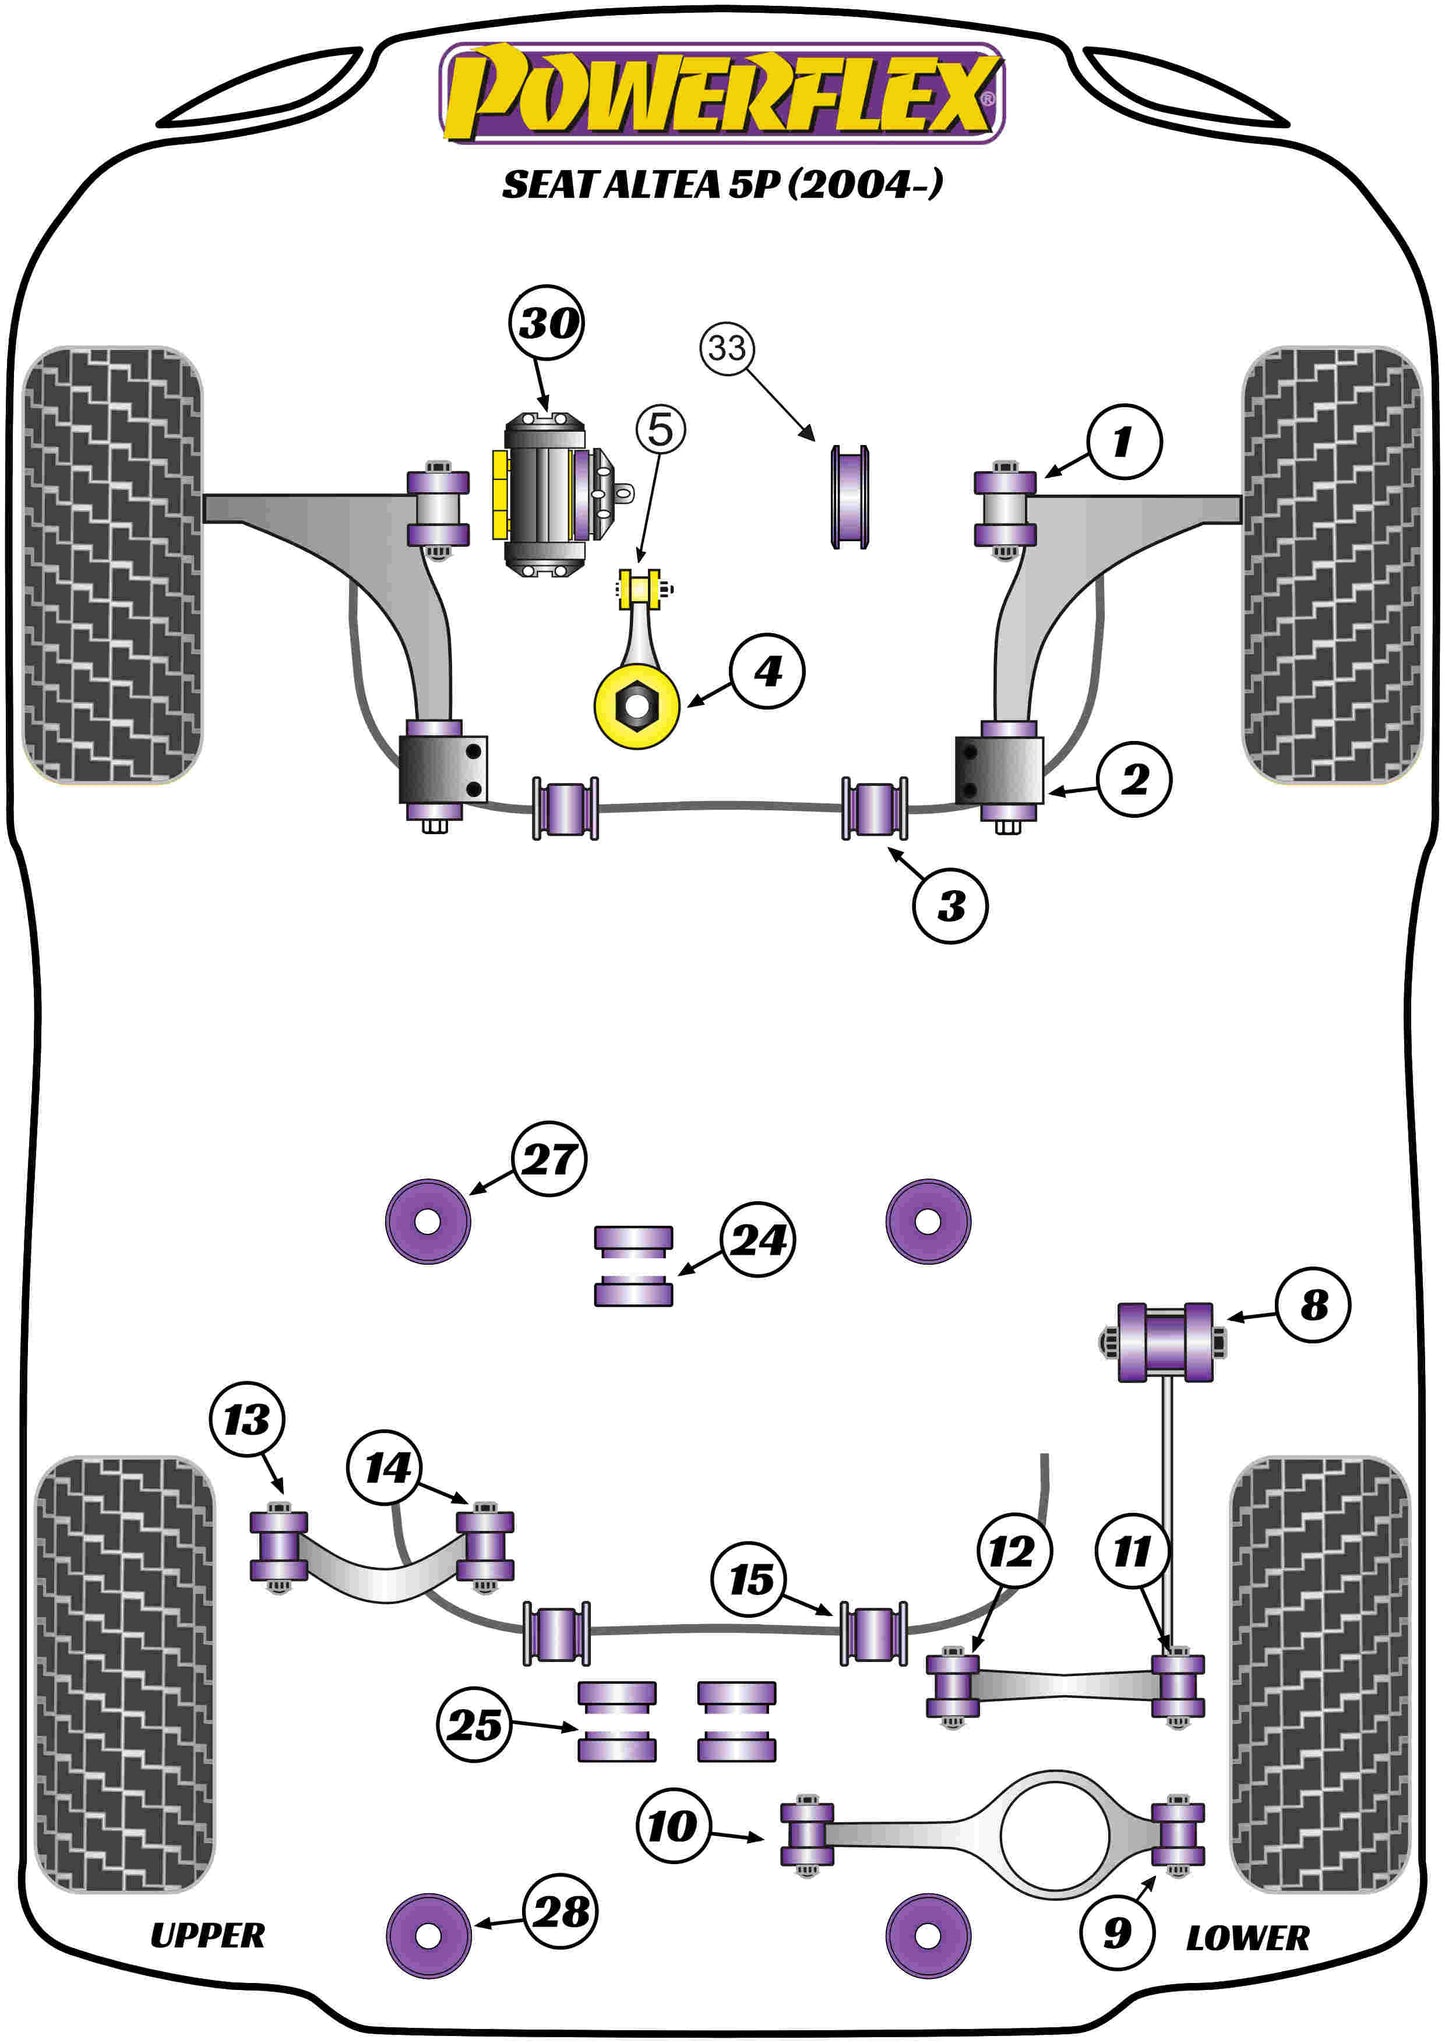 Powerflex Lower Engine Mount Insert (Large) Track for Seat Altea 5P (08-)